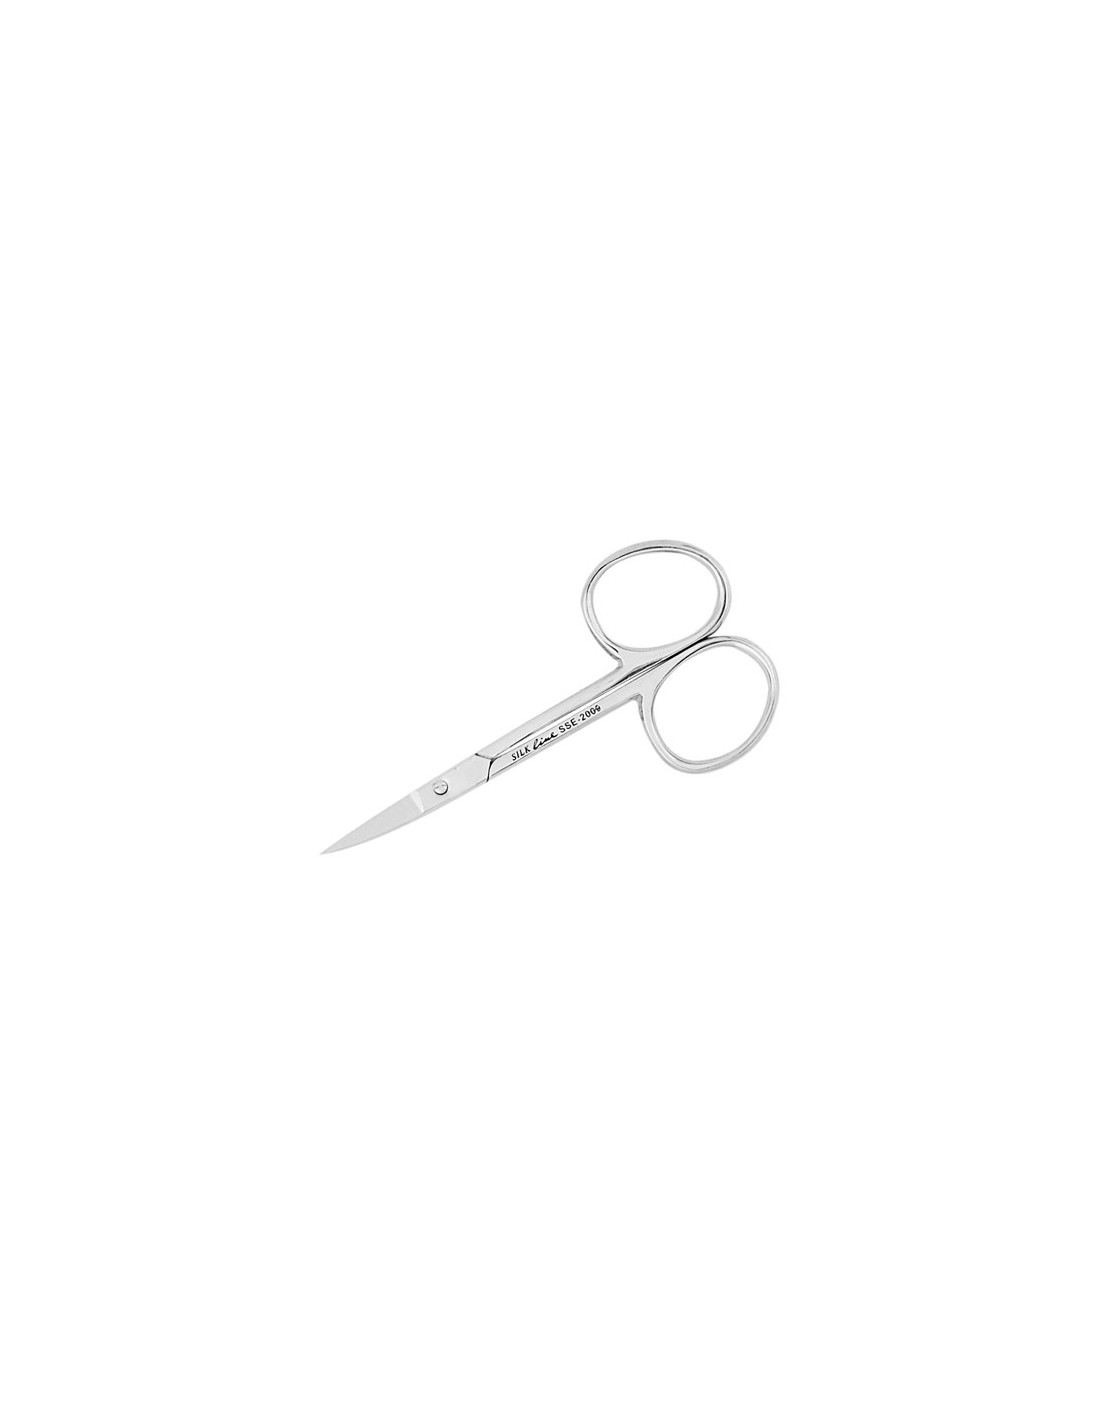 Silkline Stainless Steel Cuticle Scissors 3 1 2”